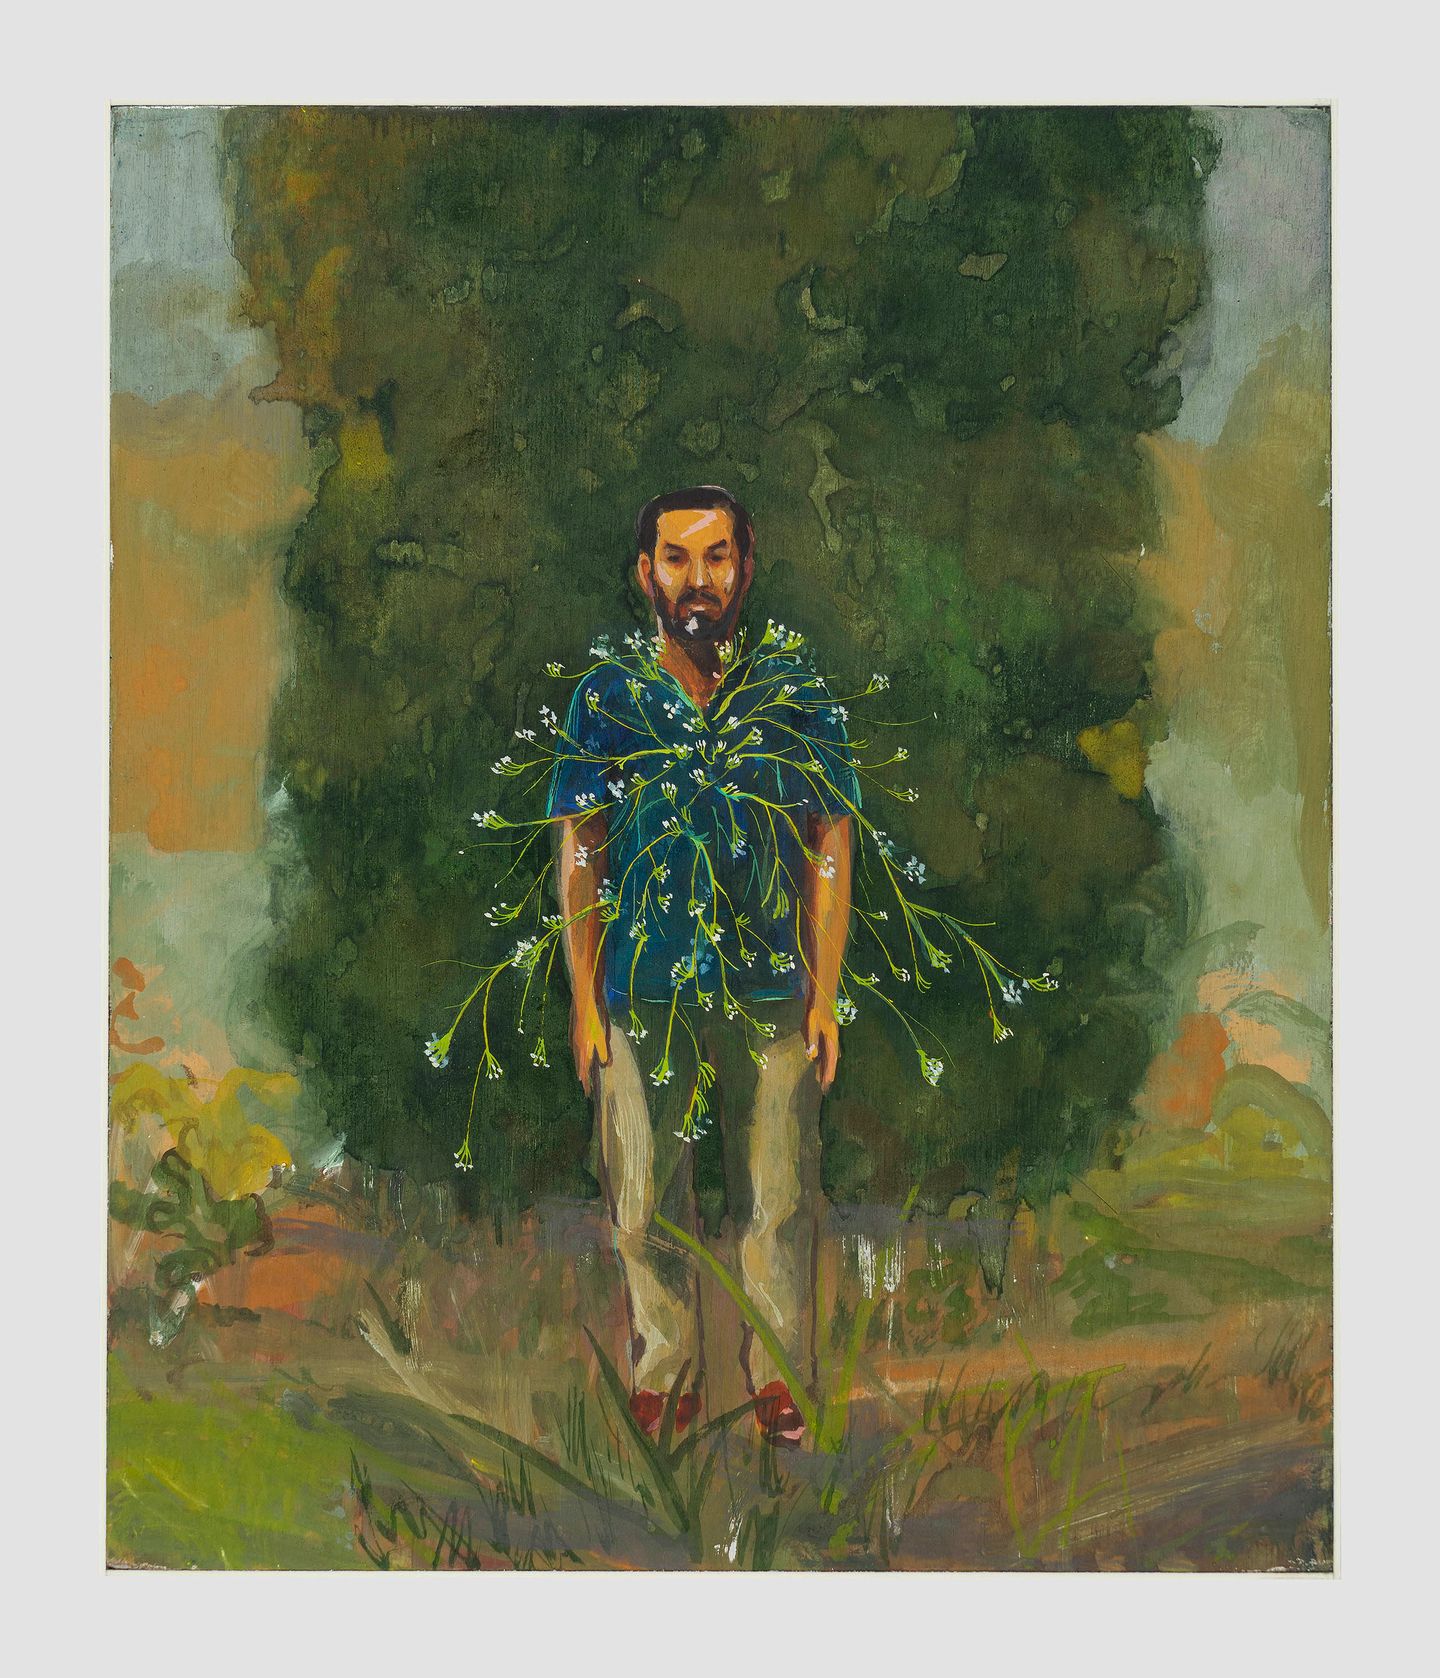 Mahesh Baliga, Flowering self (2022). Casein on board. © Mahesh Baliga. Courtesy the artist, Project 88, and David Zwirner.